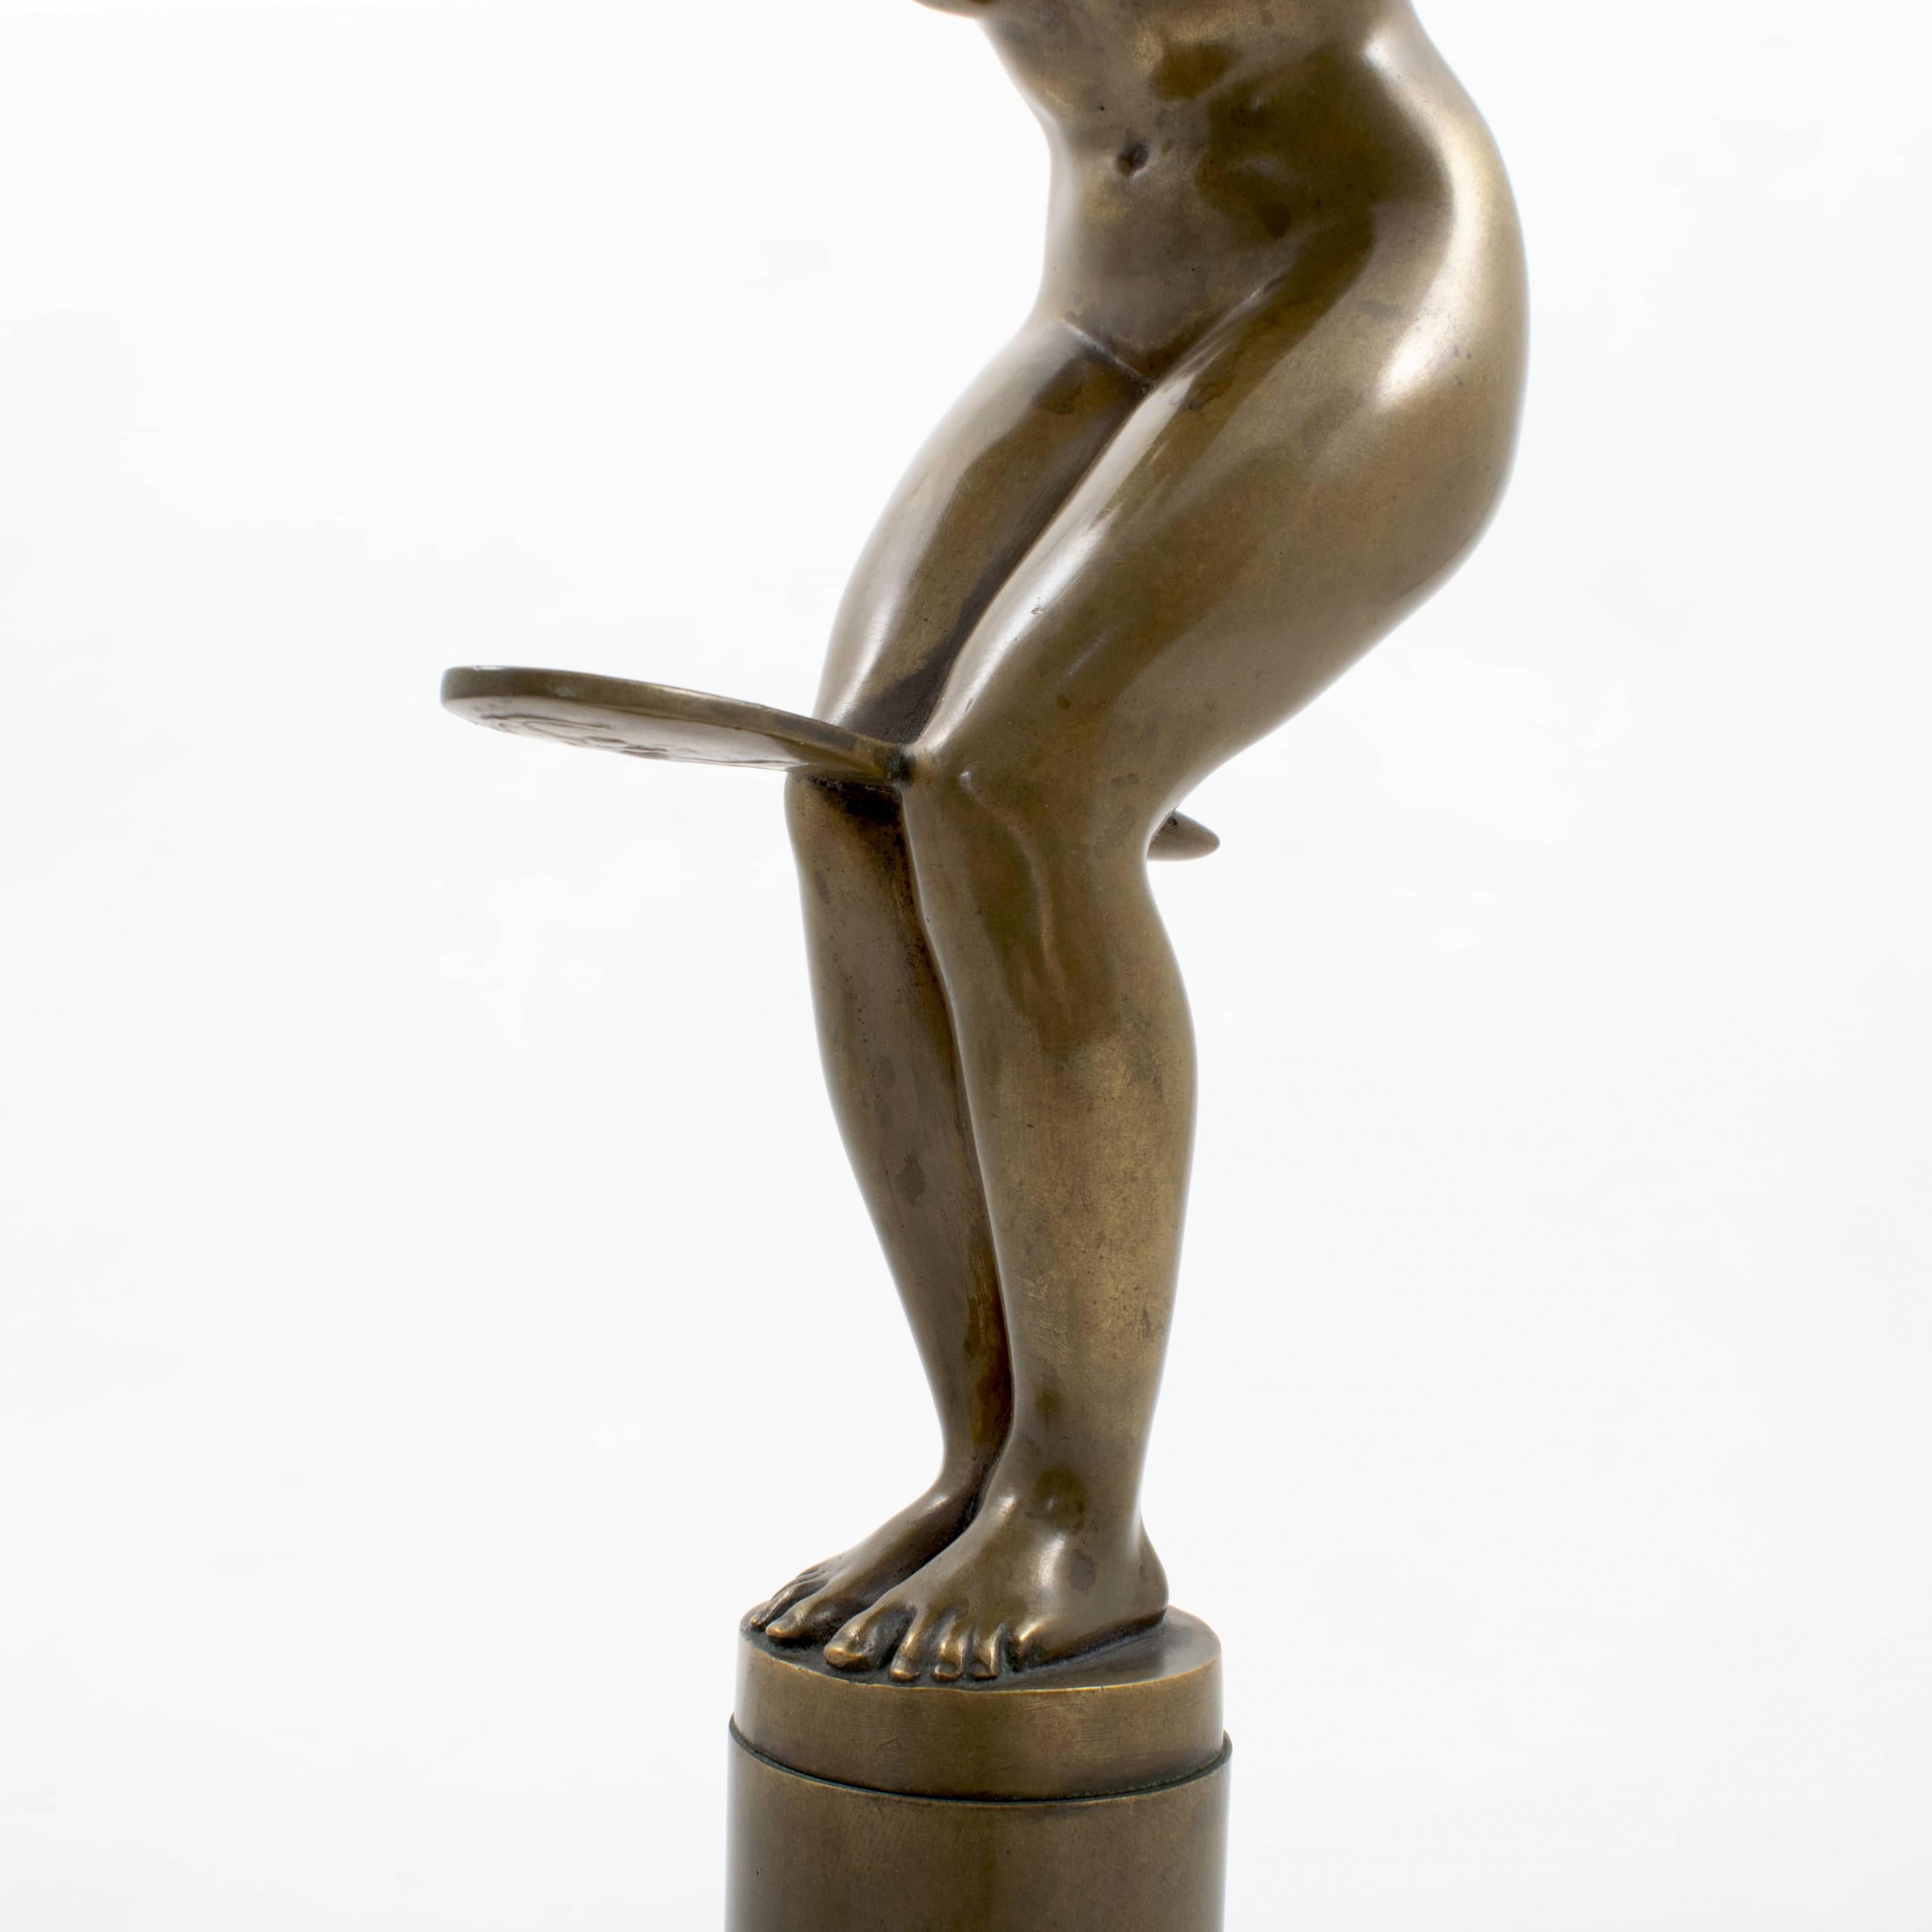 Jens Jacob Bregnø Art Deco Bronze Skulptur eines Aktes 1930er Jahre (20. Jahrhundert) im Angebot